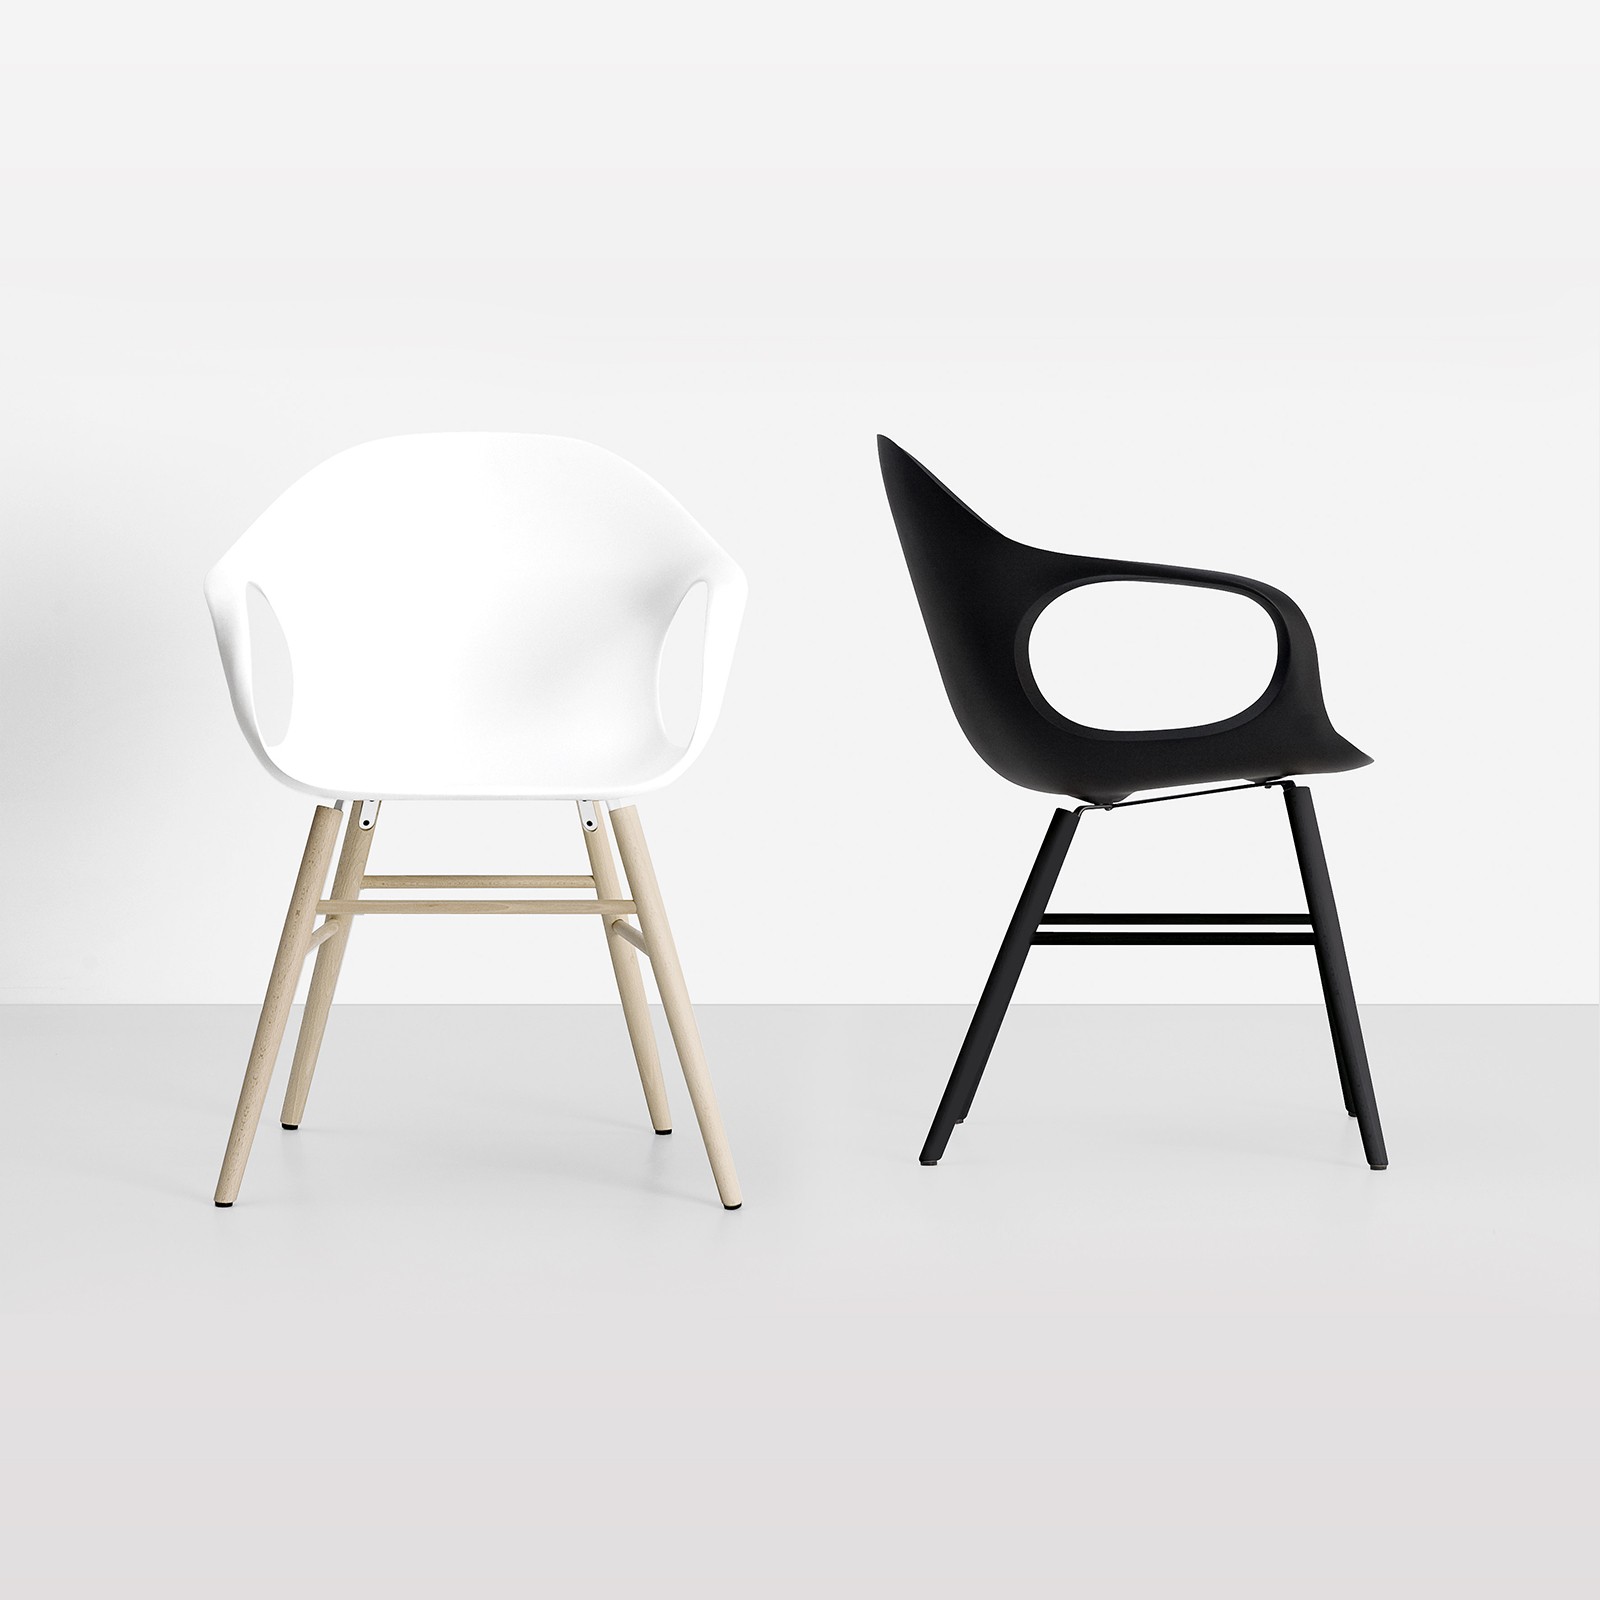 Möbel - Stühle - Elephant Wood Sessel - Kristalia - schwarz weiß - Buchenfurnier, lackiertes Polyurhethan